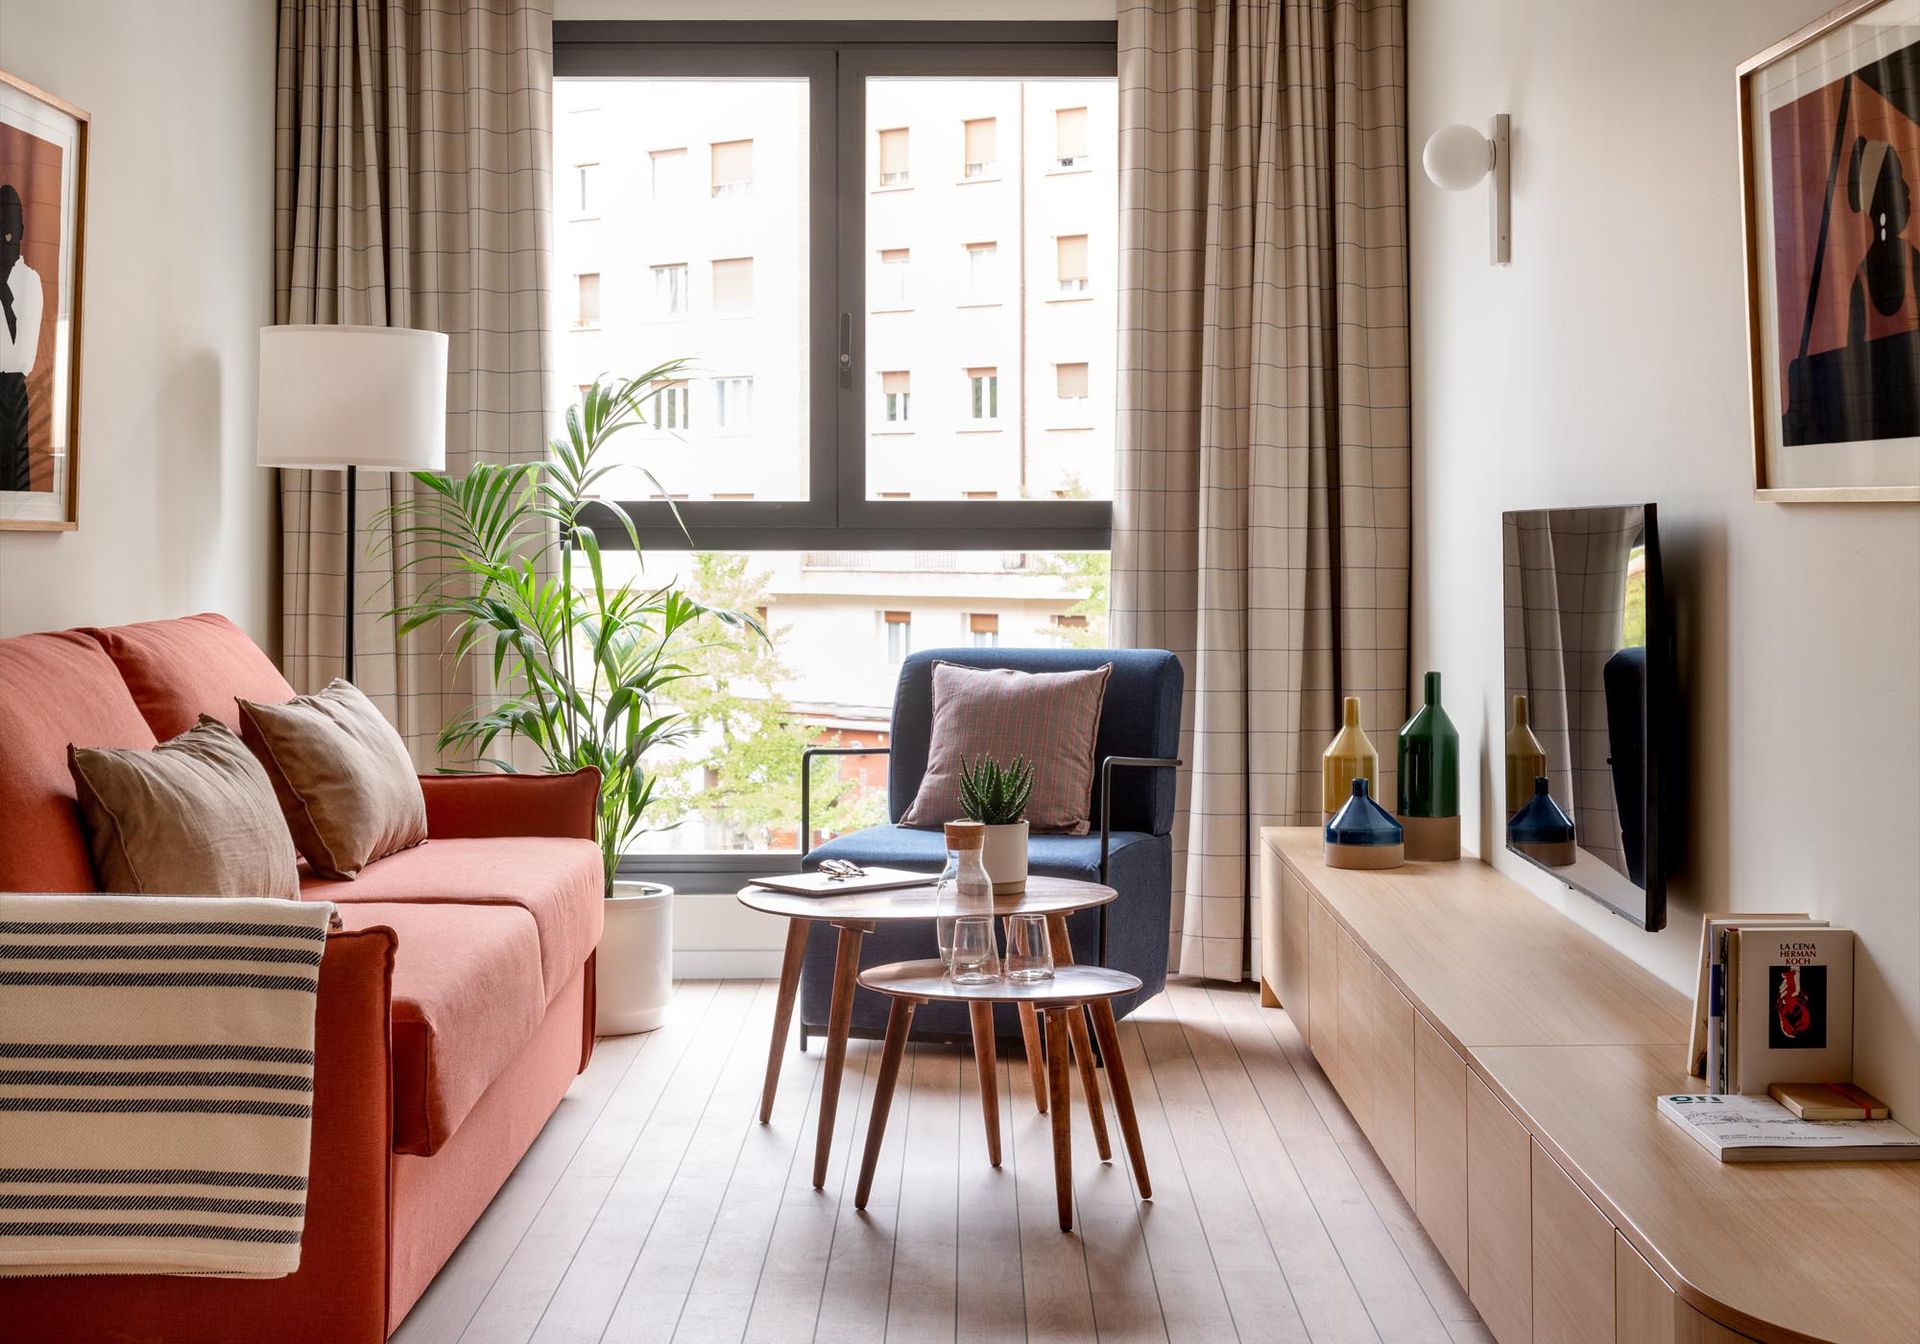 One bedroom apartment in Vitoria city centre